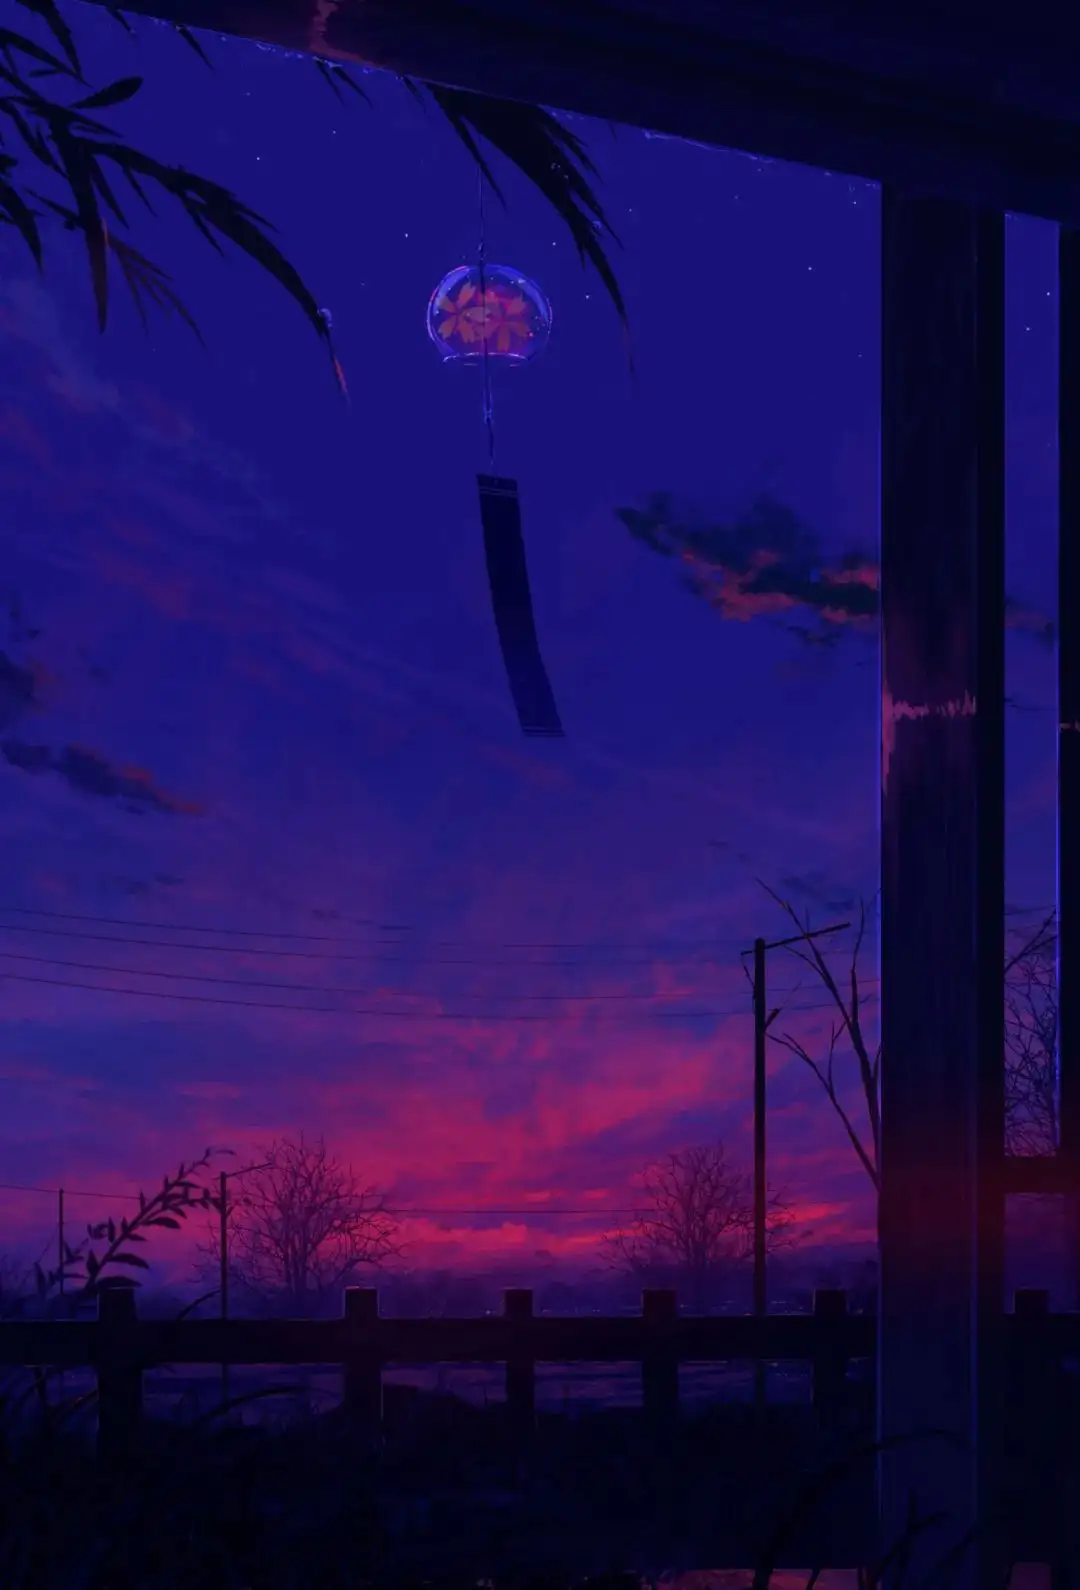 Anime Sunset HD Wallpaper by 画师JW